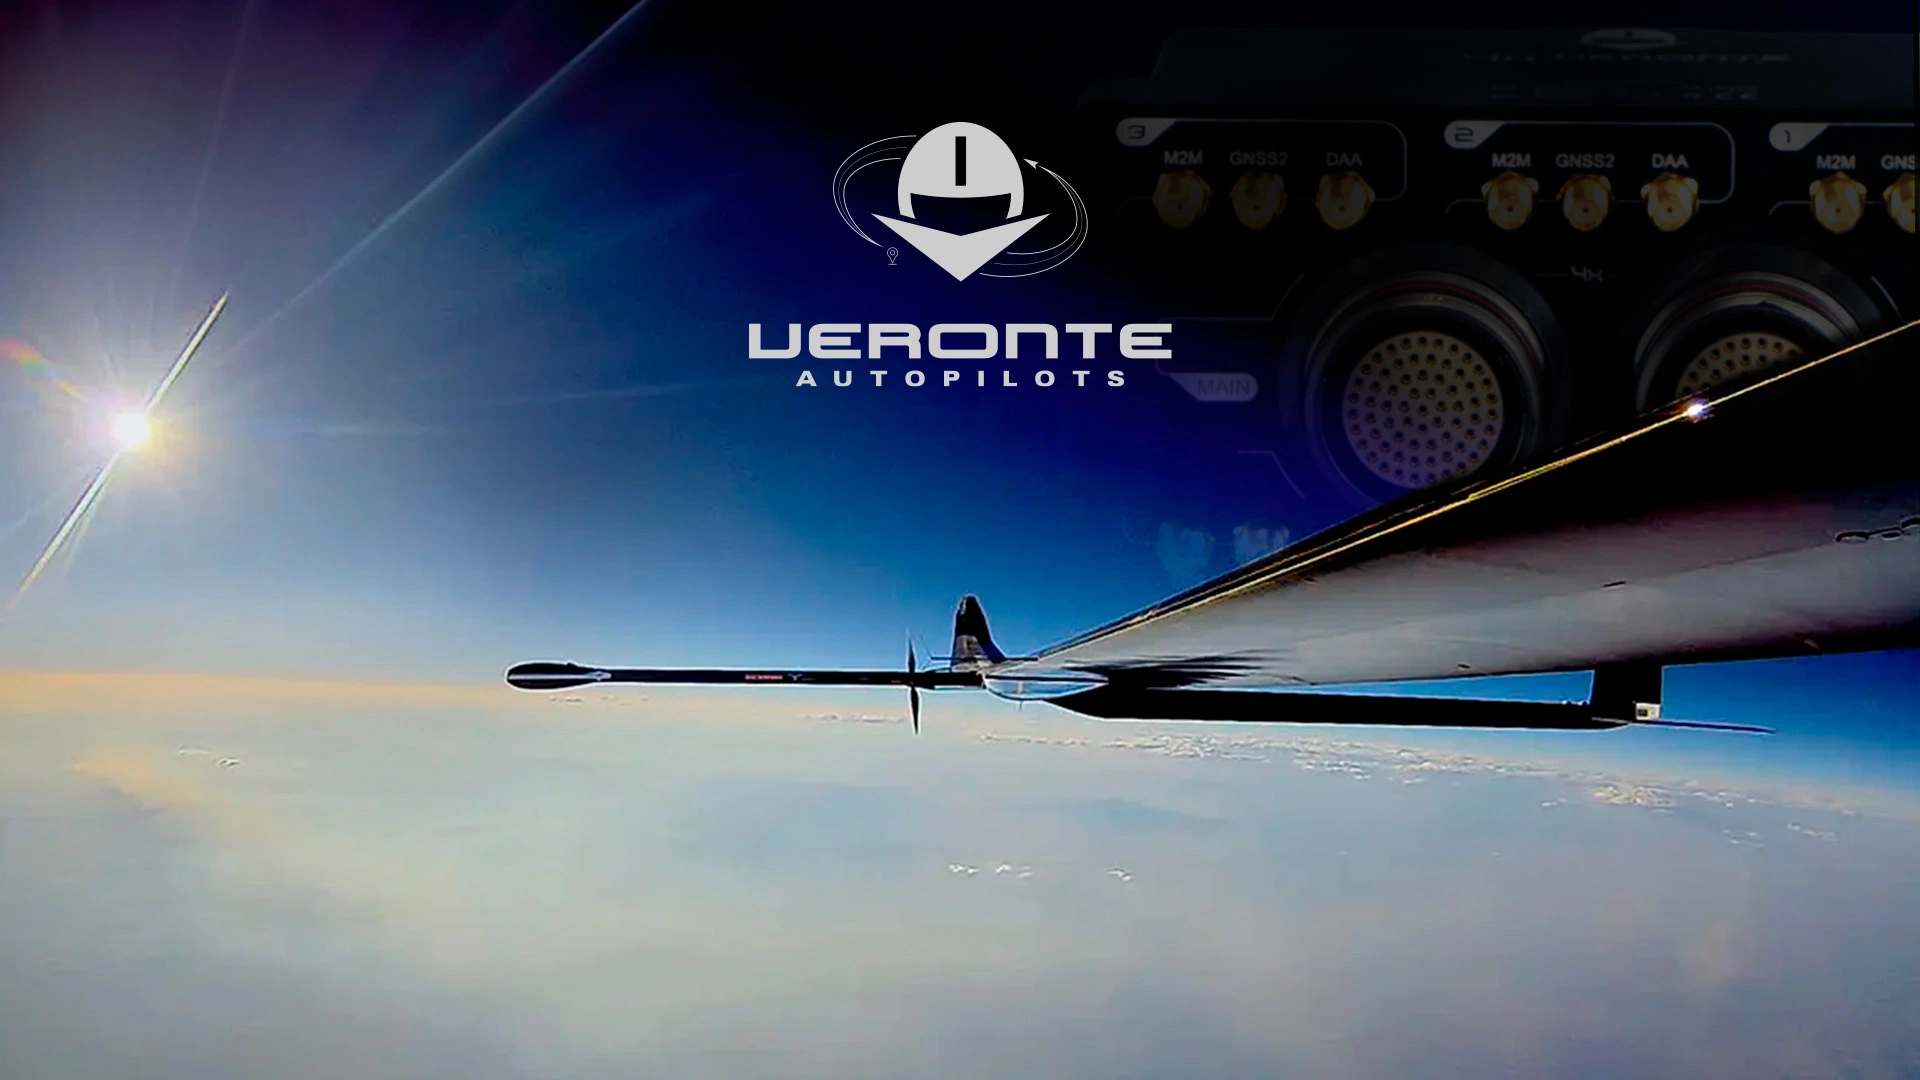 HAPS (High Altitude Platform System) Flights with Veronte Autopilot